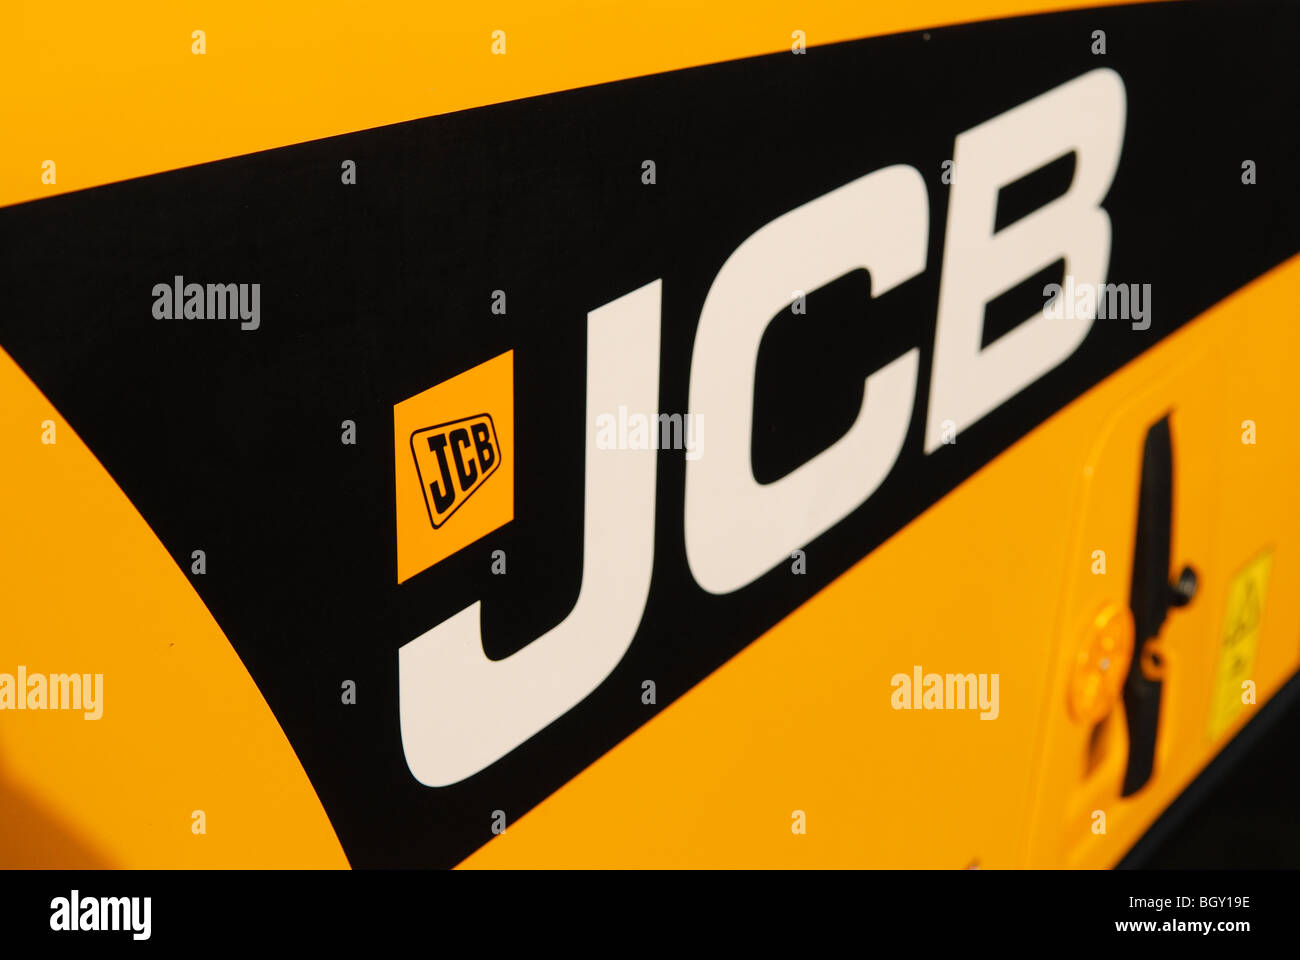 JCB Machinery Company. Stock Photo